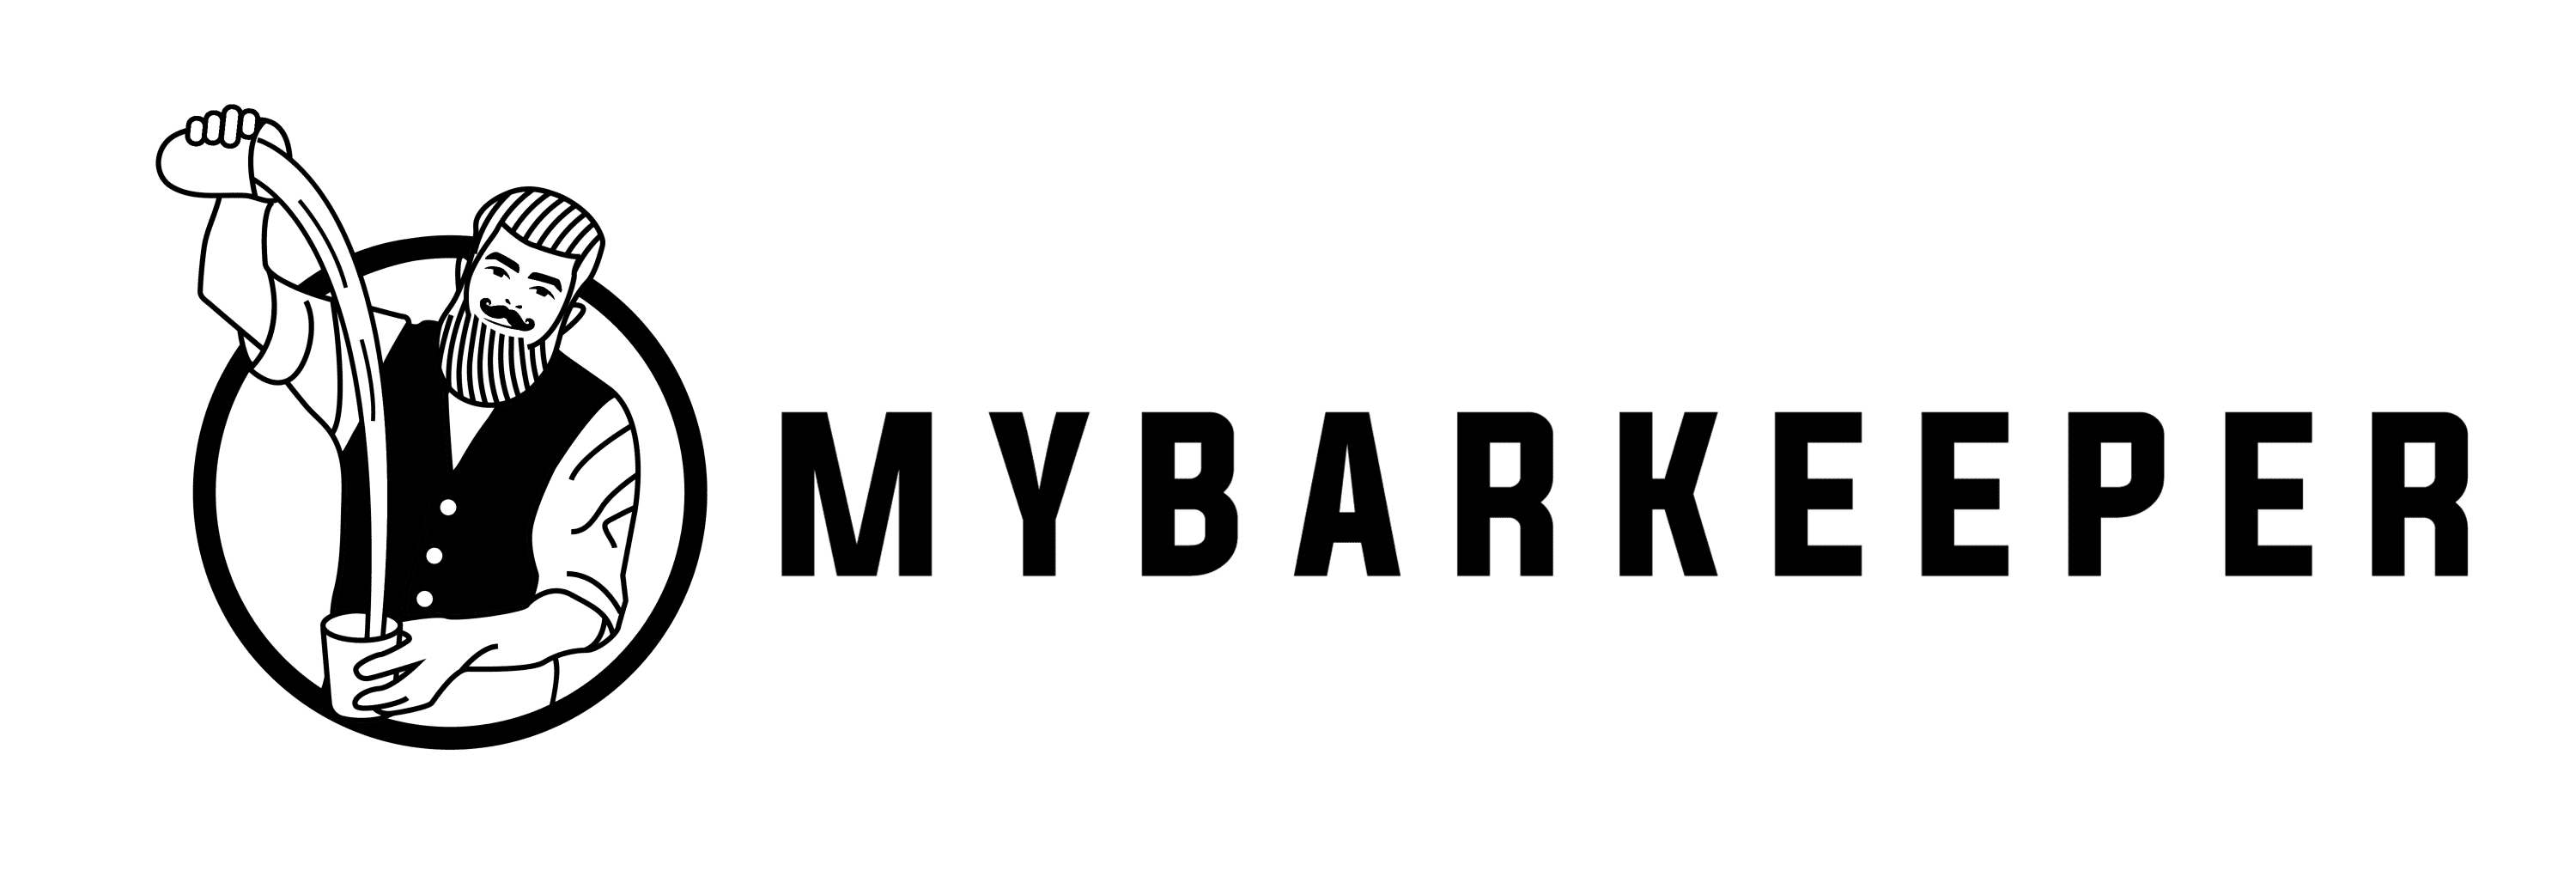 MyBarkeeper Logo